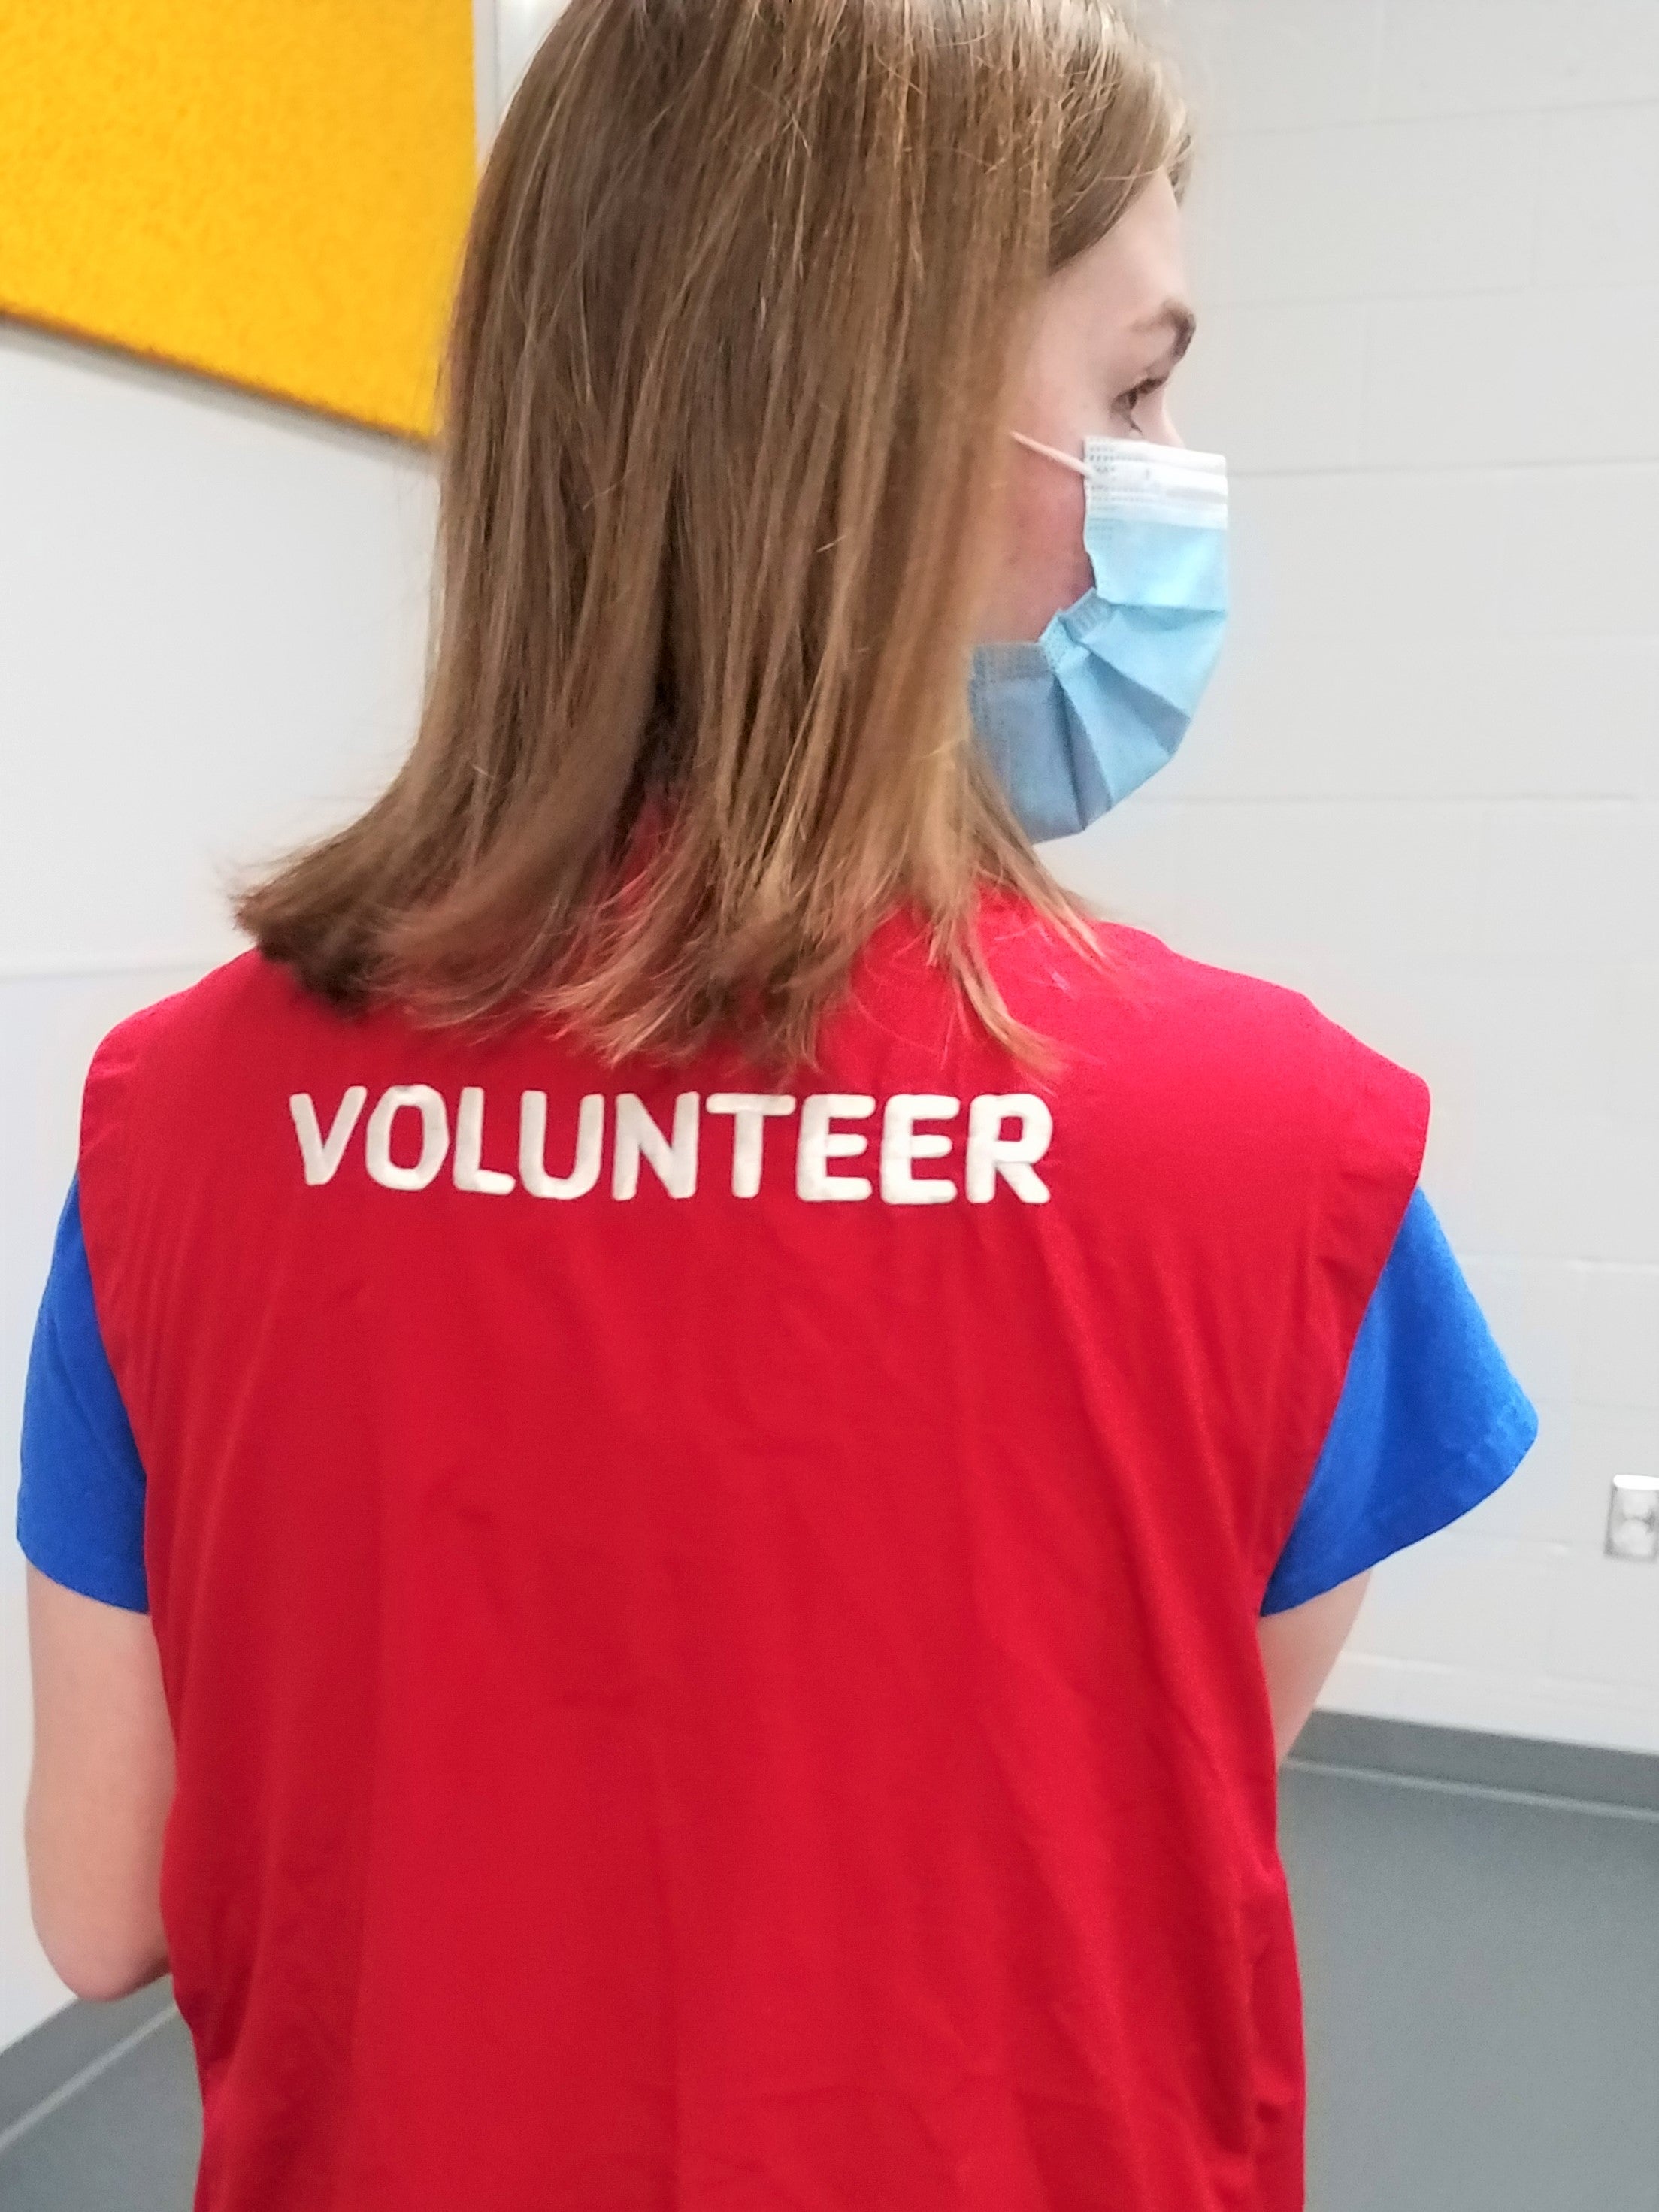 Student wearing a red volunteer vest